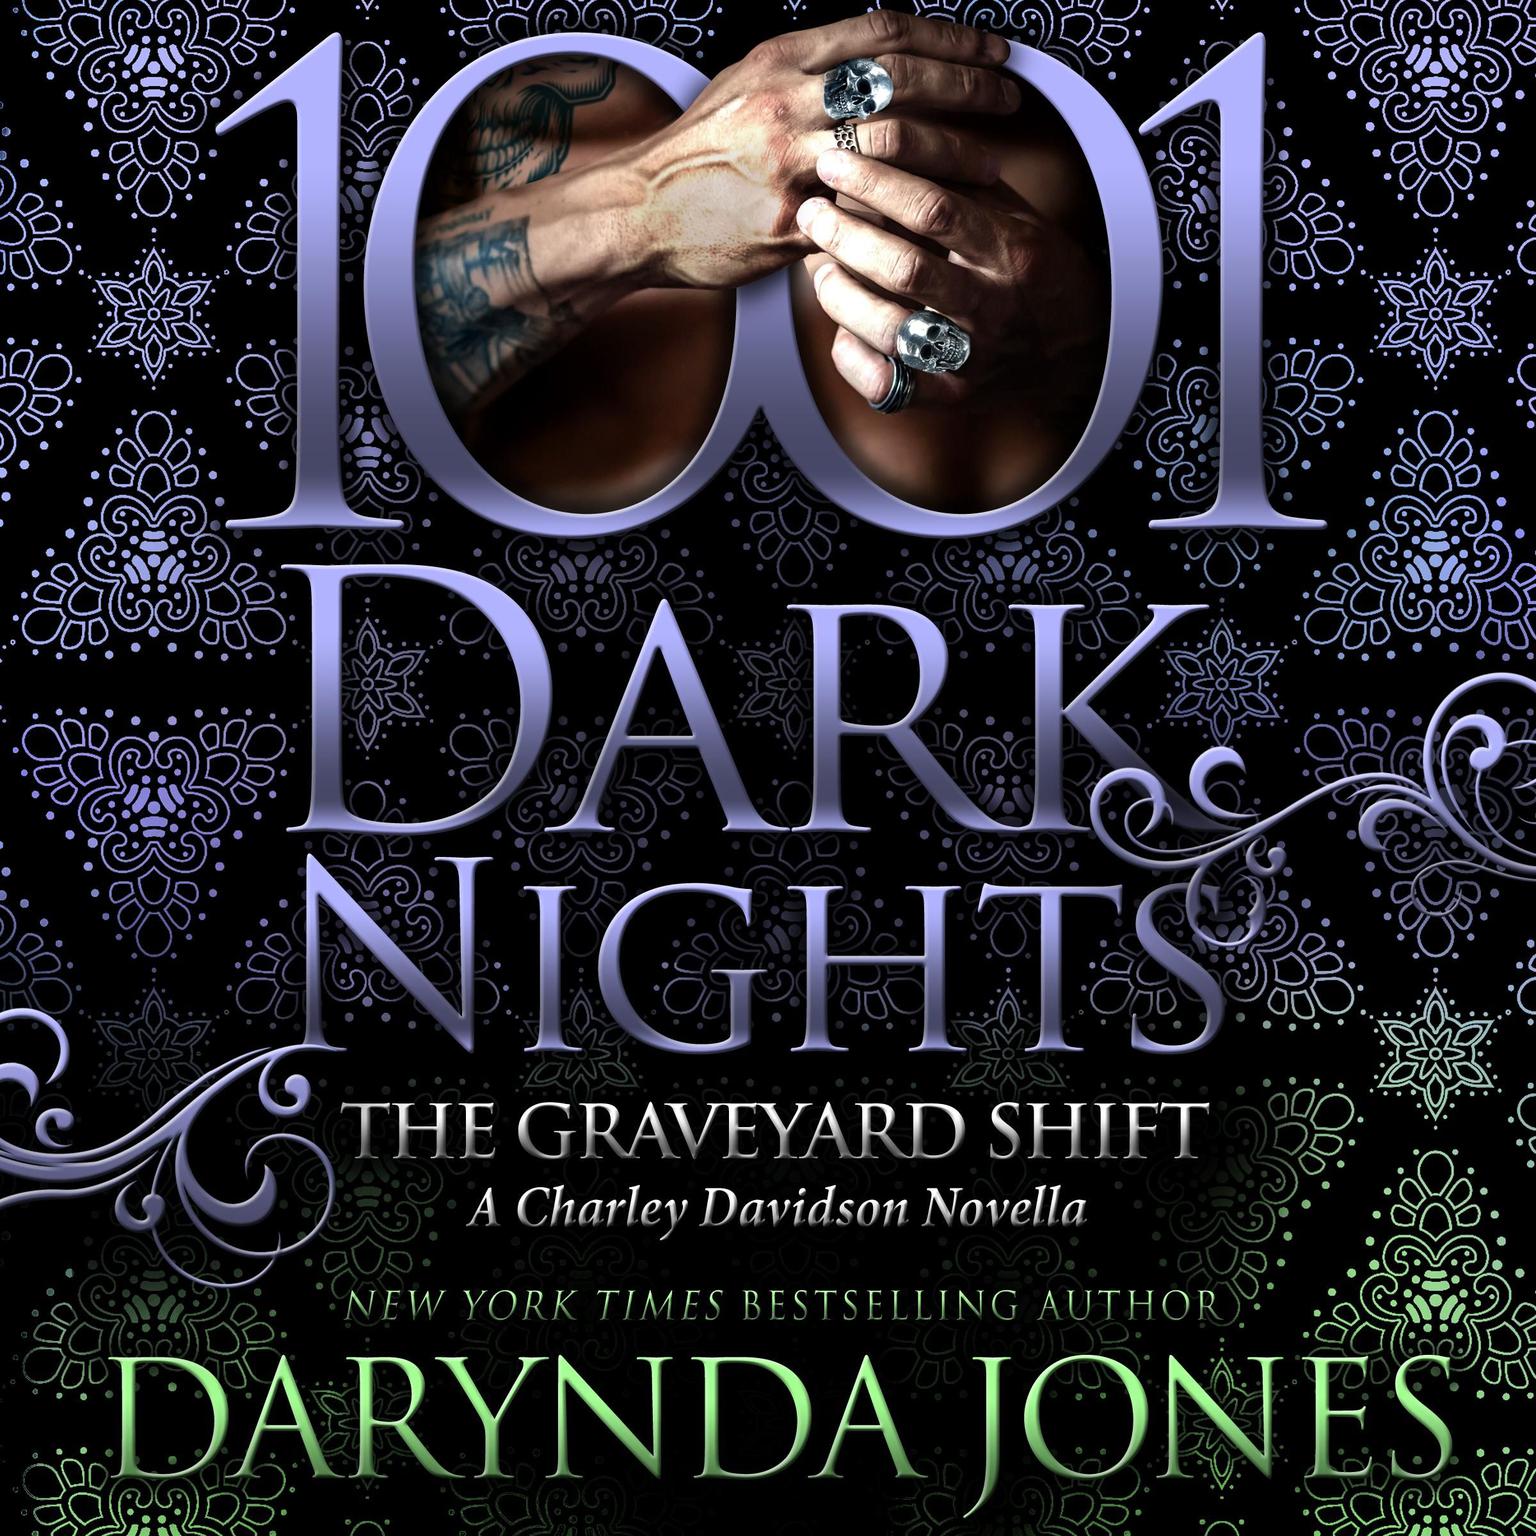 The Graveyard Shift: A Charley Davidson Novella Audiobook, by Darynda Jones